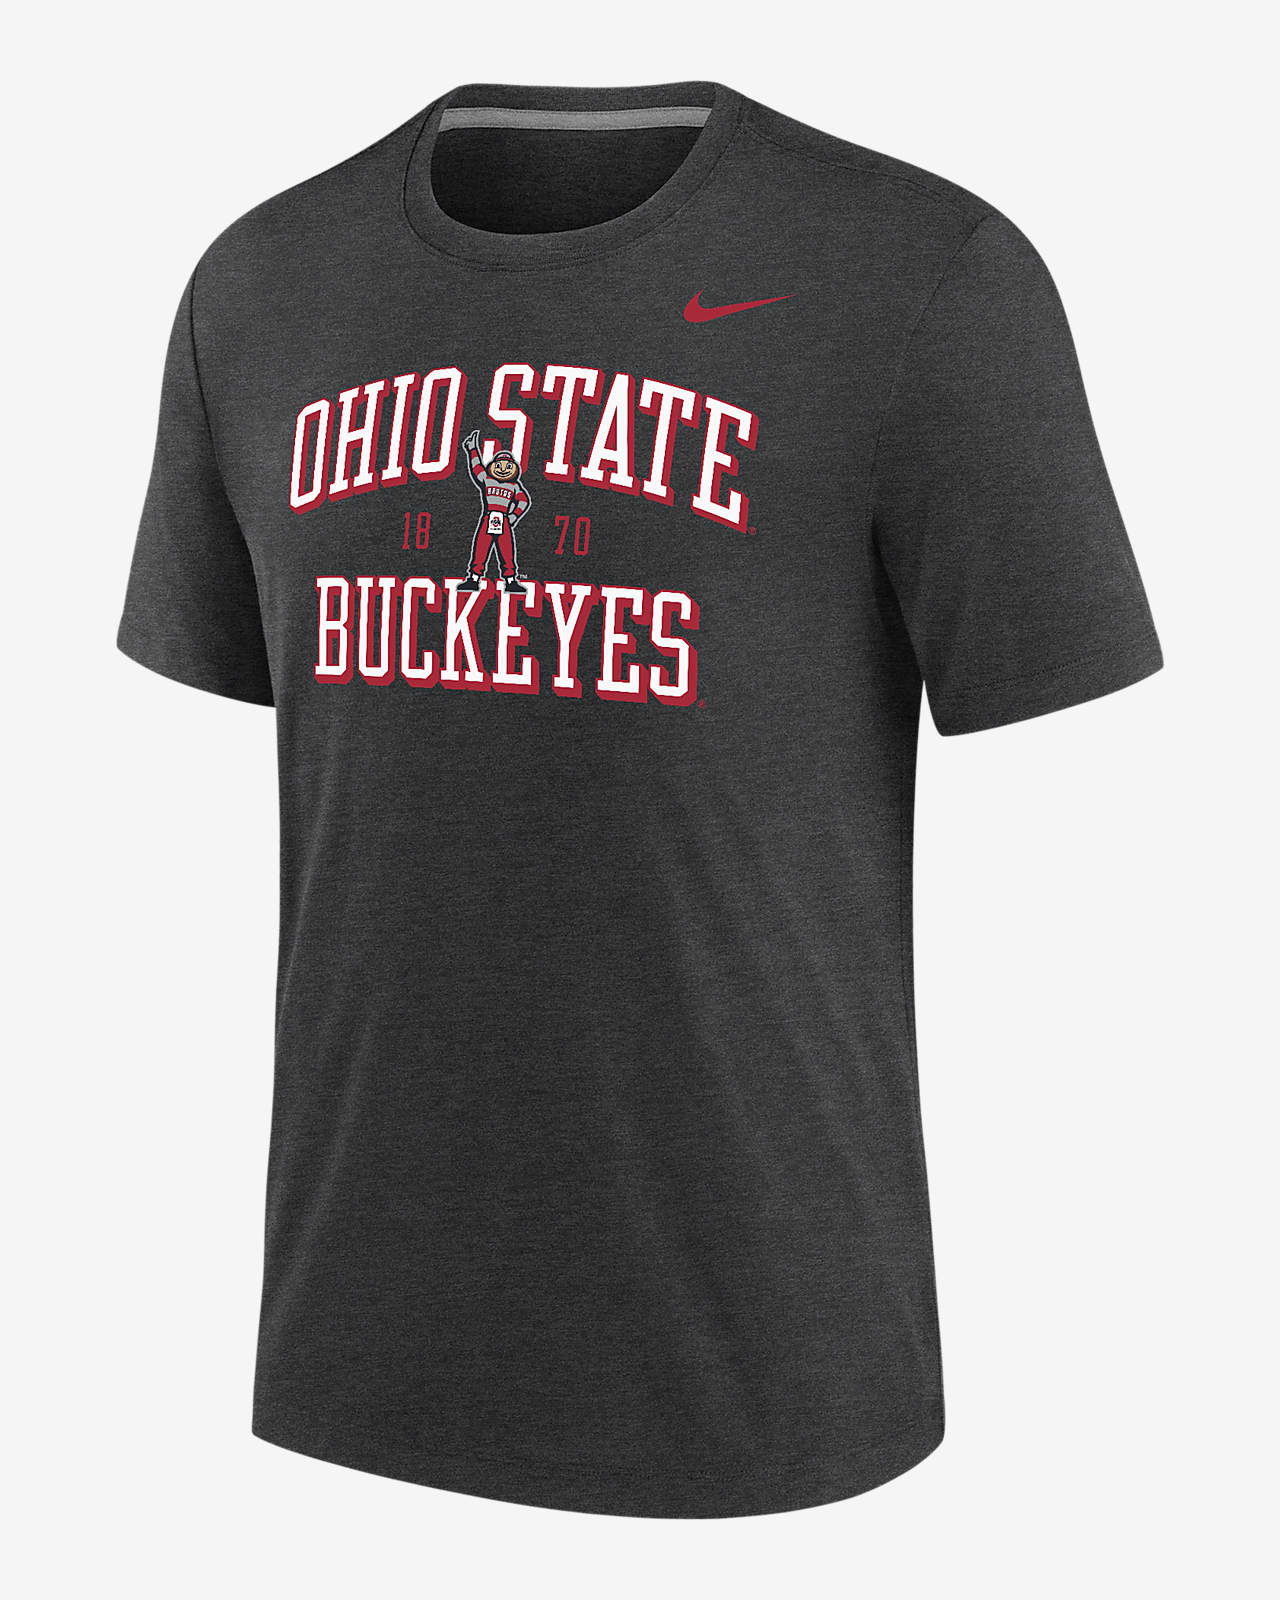 Ohio State Men's Nike College T-Shirt